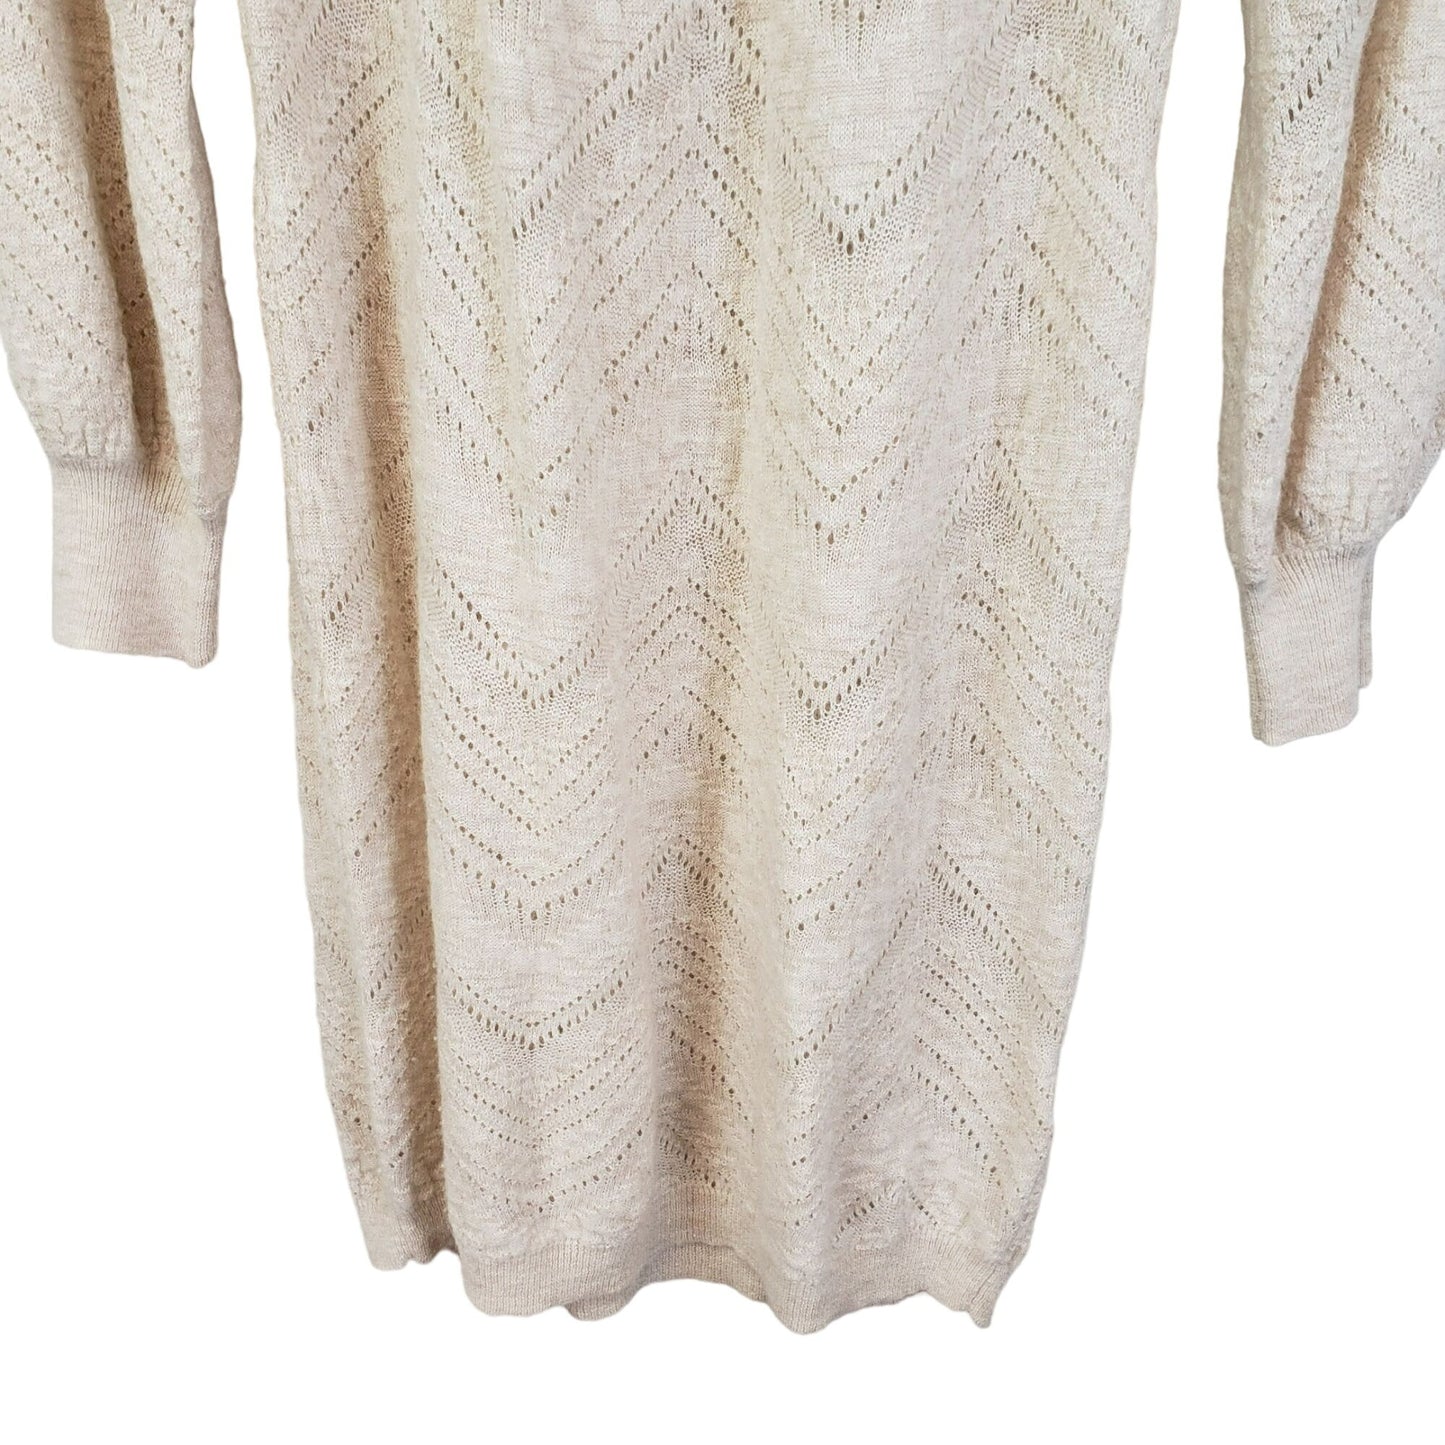 3.1 Phillip Lim Alpaca Wool Blend Sweater Dress Size XS